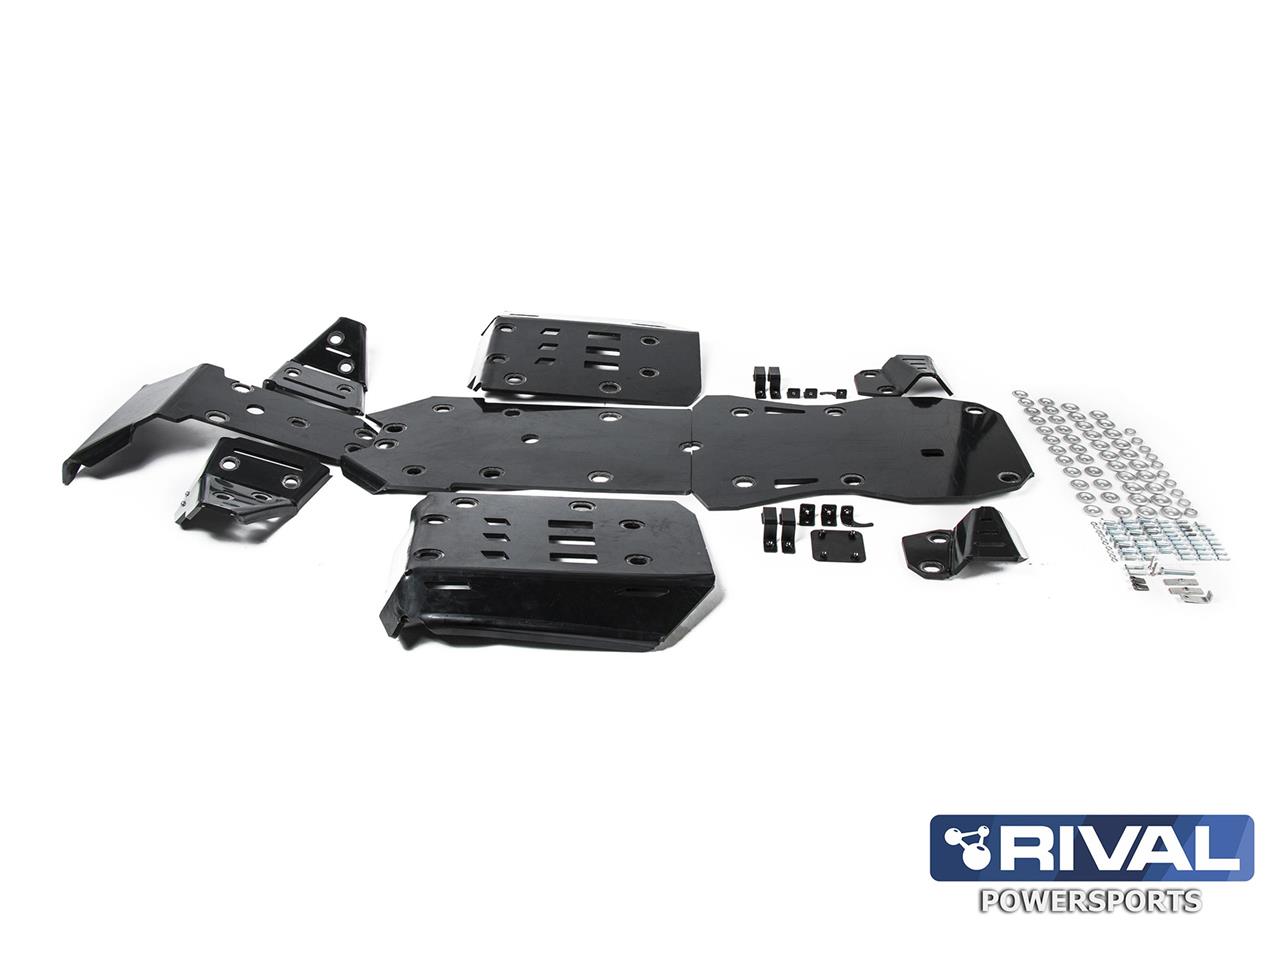 Kit protection châssis intégrale PHD RIVAL - CFORCE 850 / 1000 -